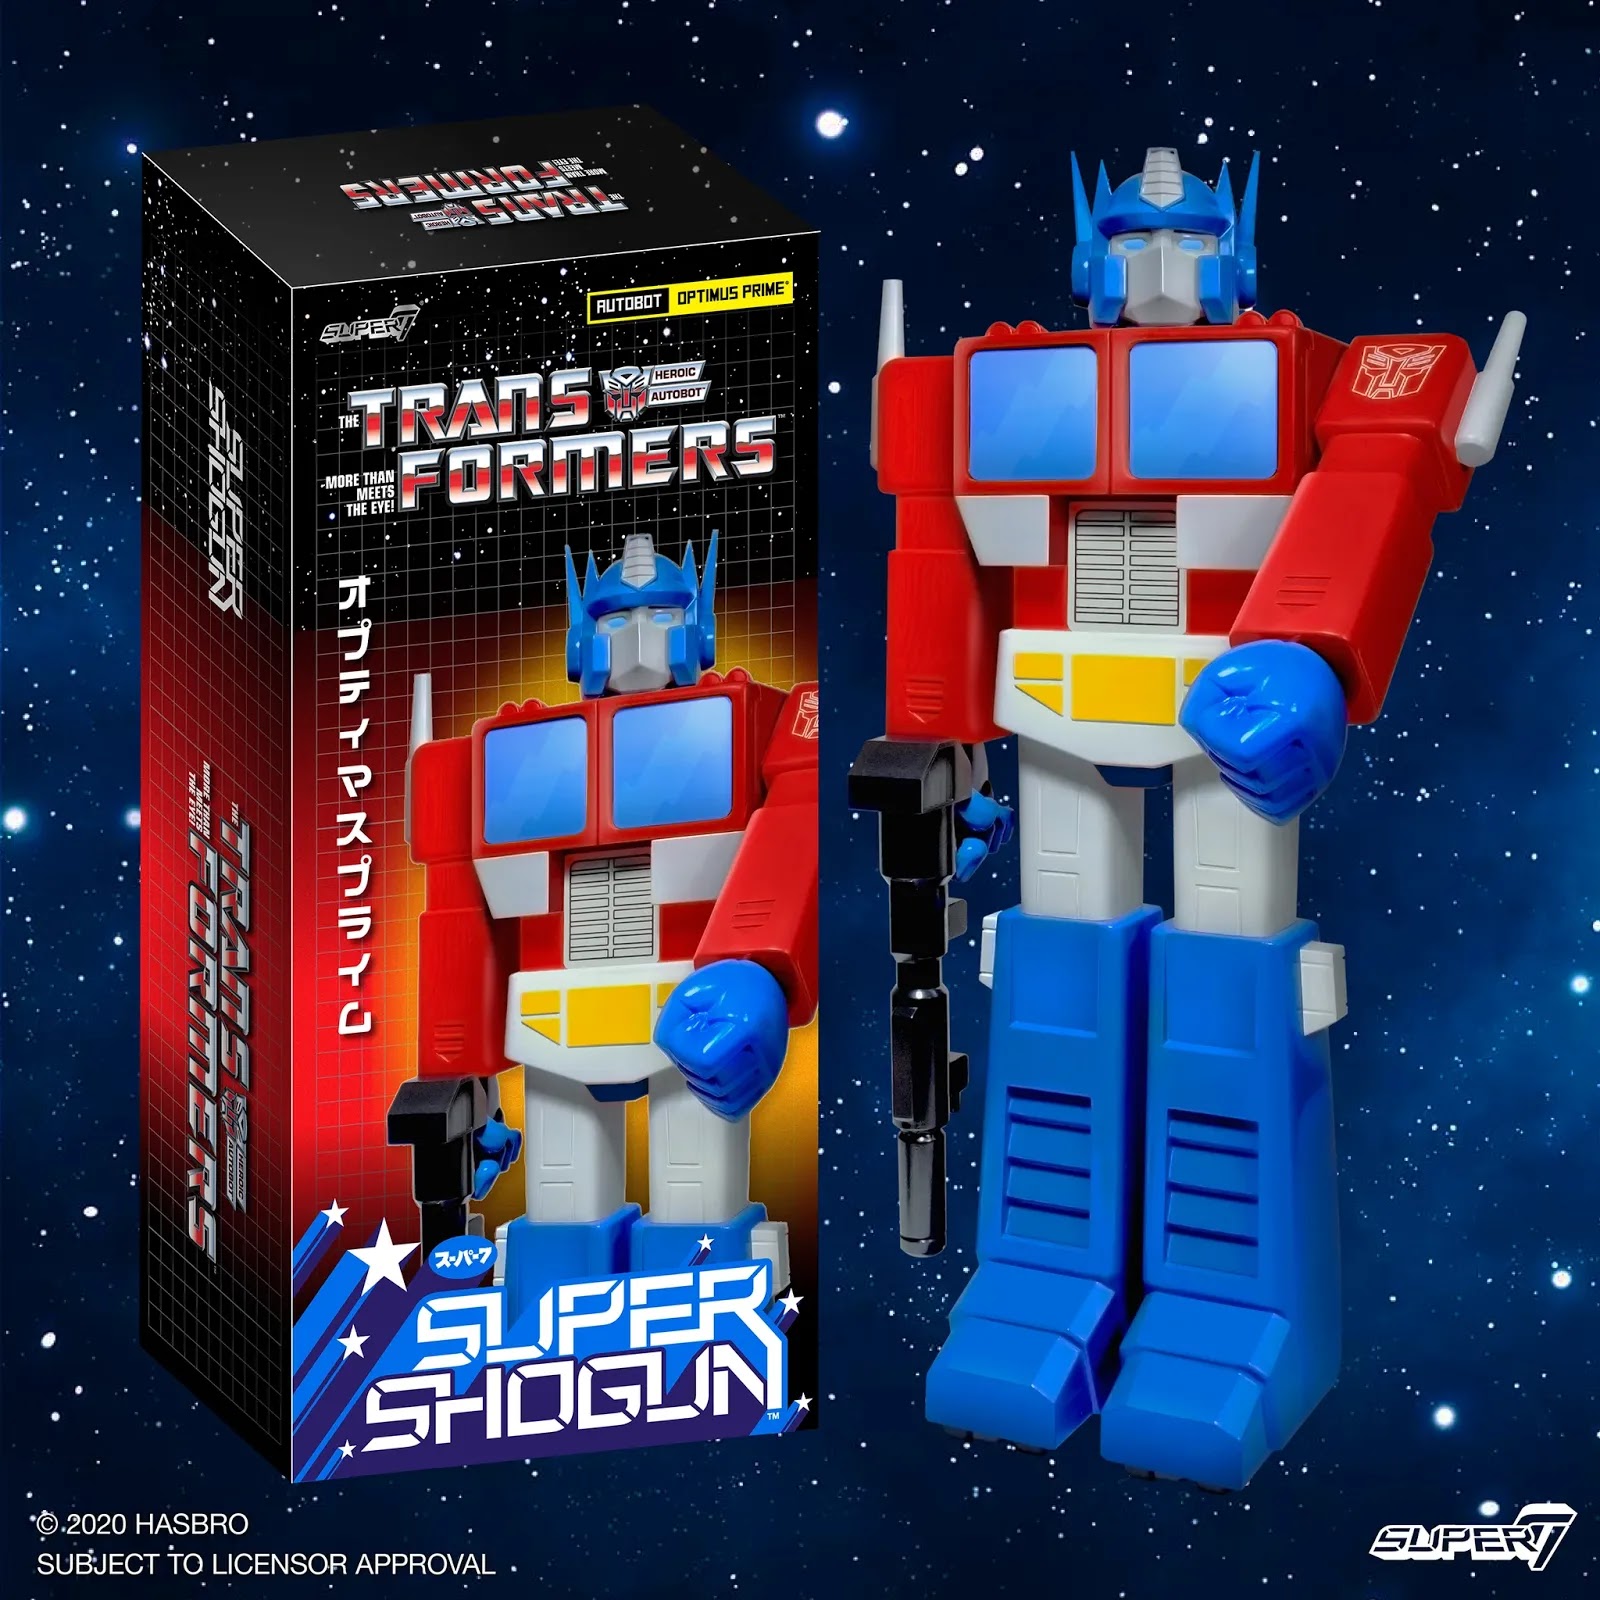 luft Begrænse produktion The Blot Says...: Transformers Optimus Prime Super Shogun Figure by Super7